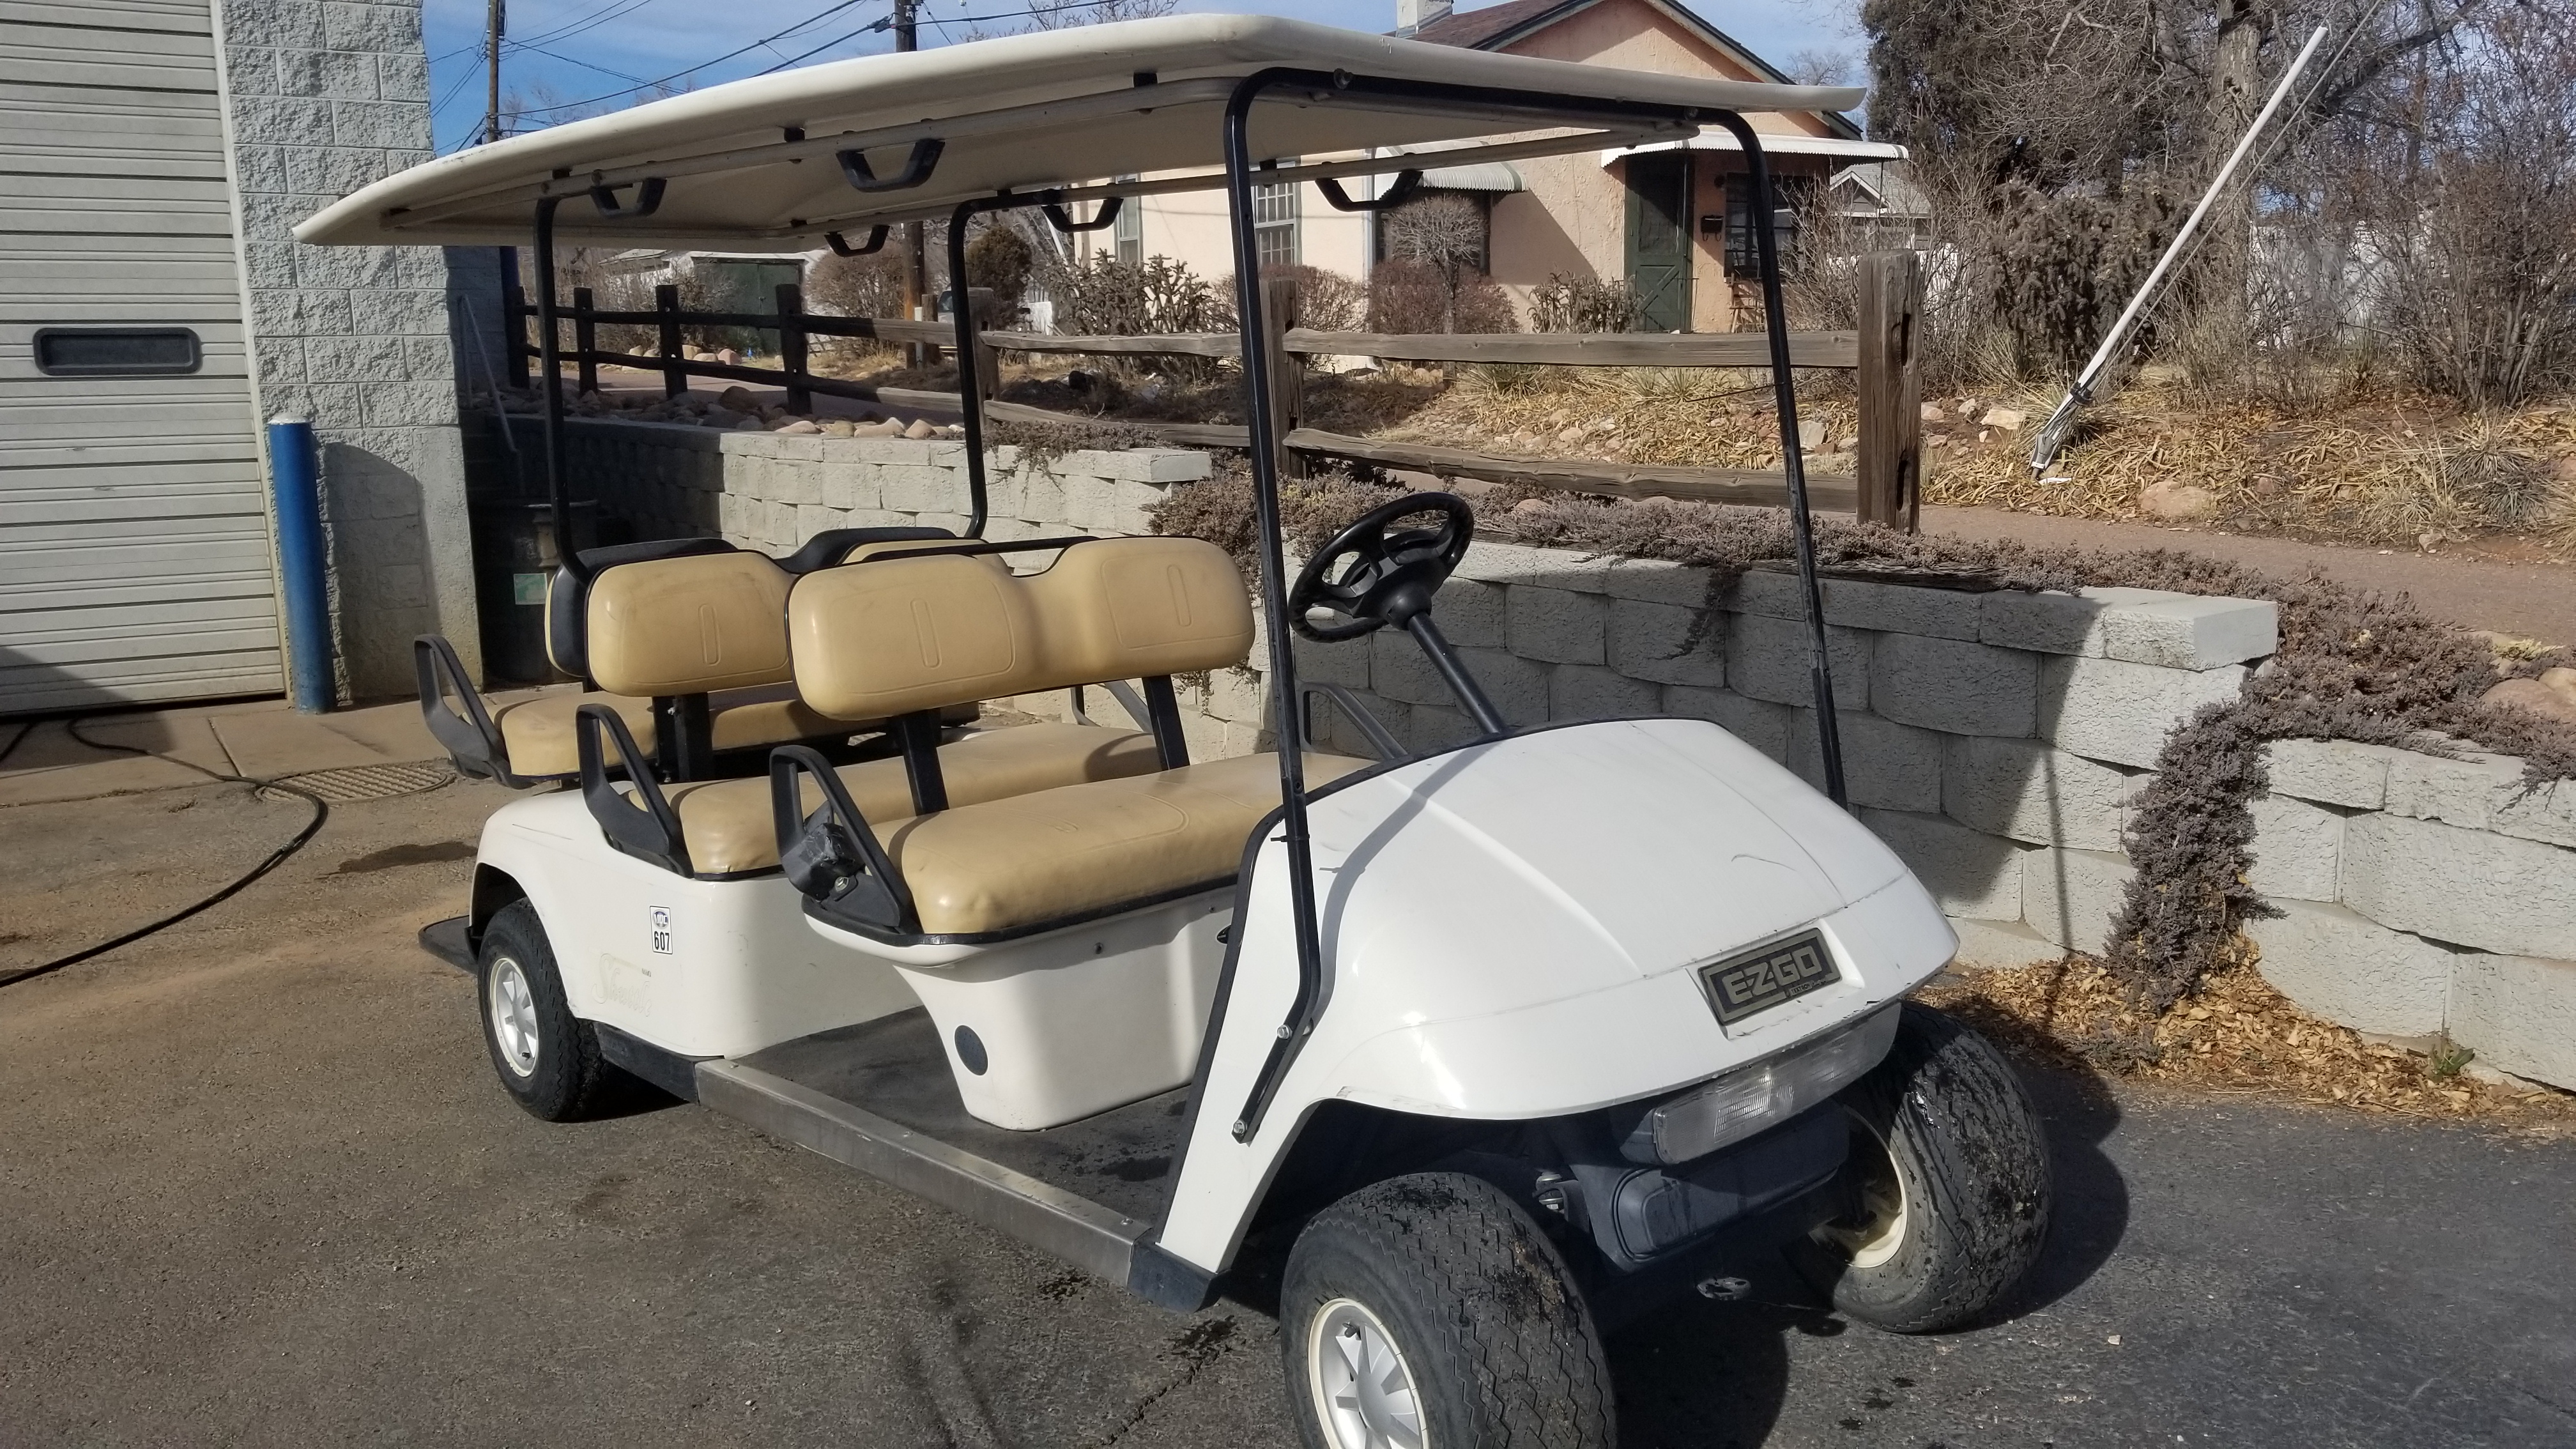 EZGO Golf Carts for Sale – New EZGO Cars